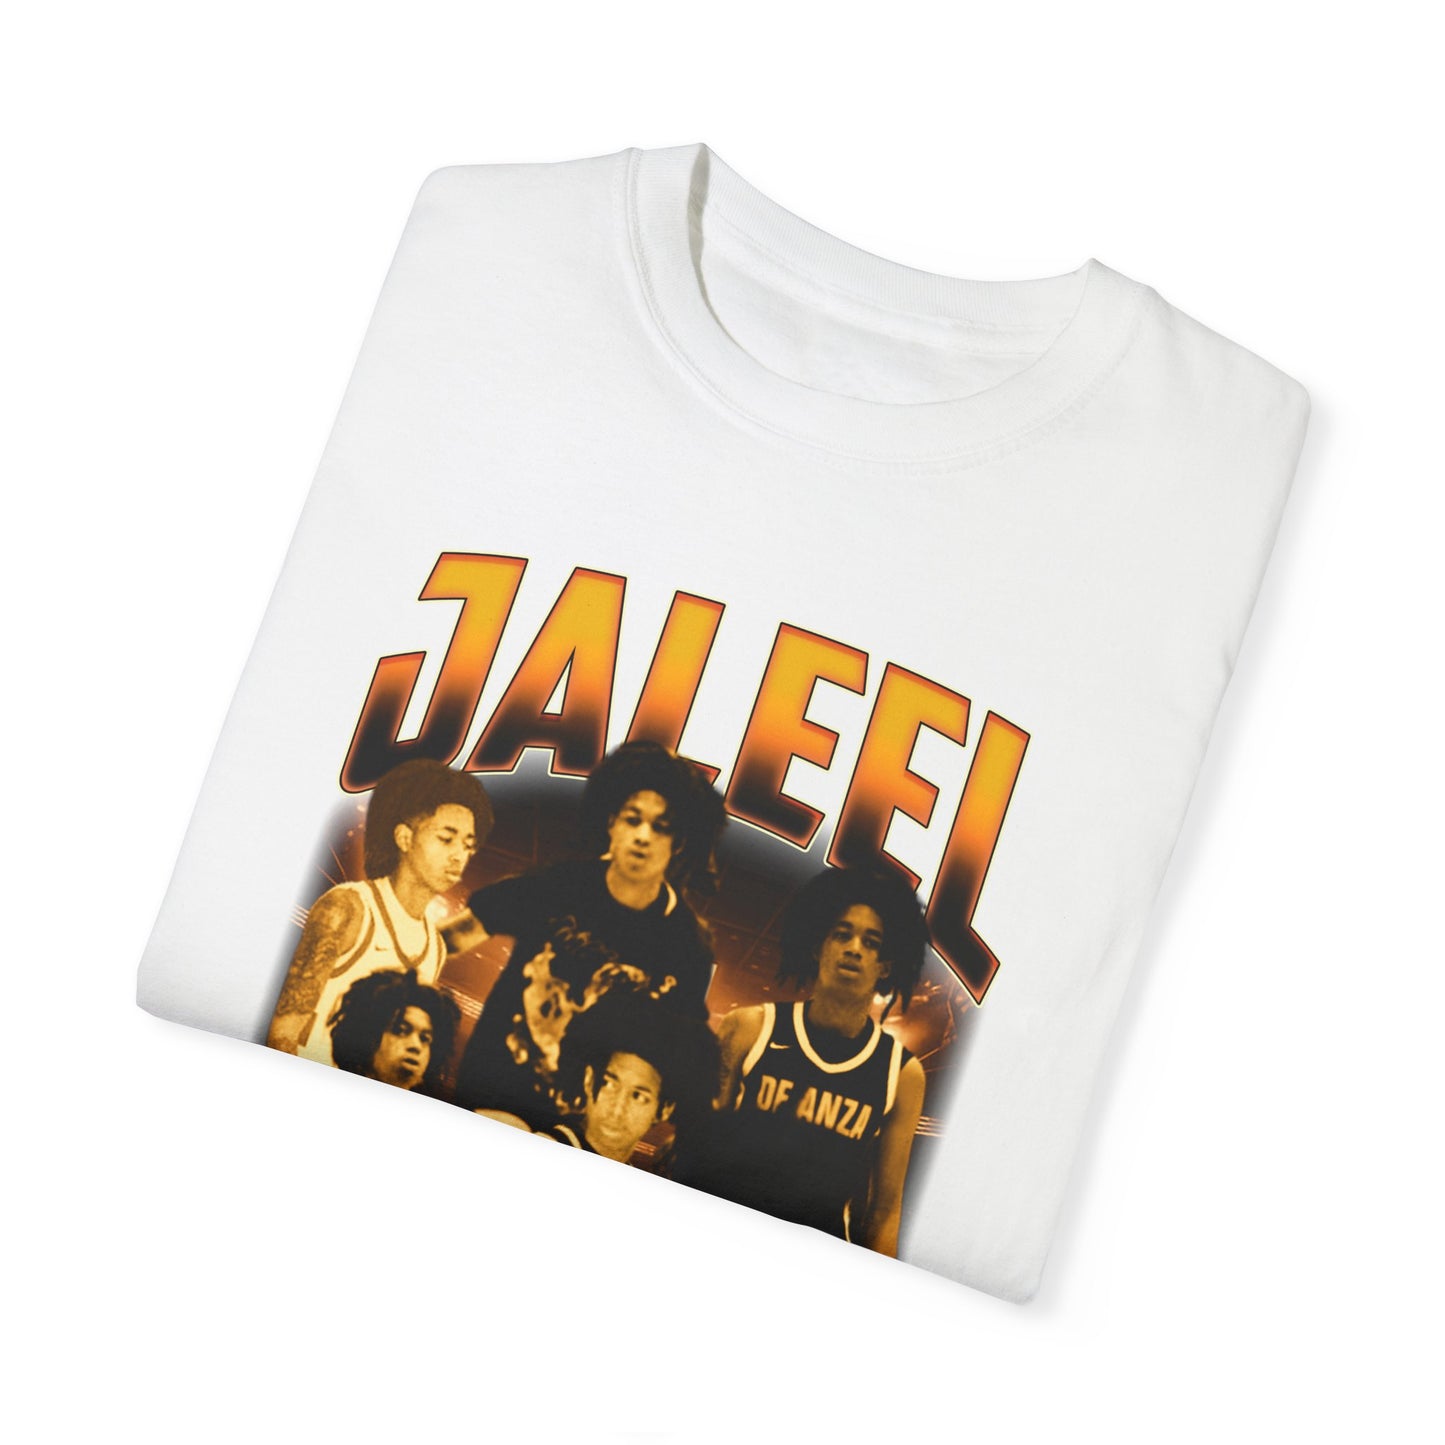 Jaleel Jackson Graphic T-shirt